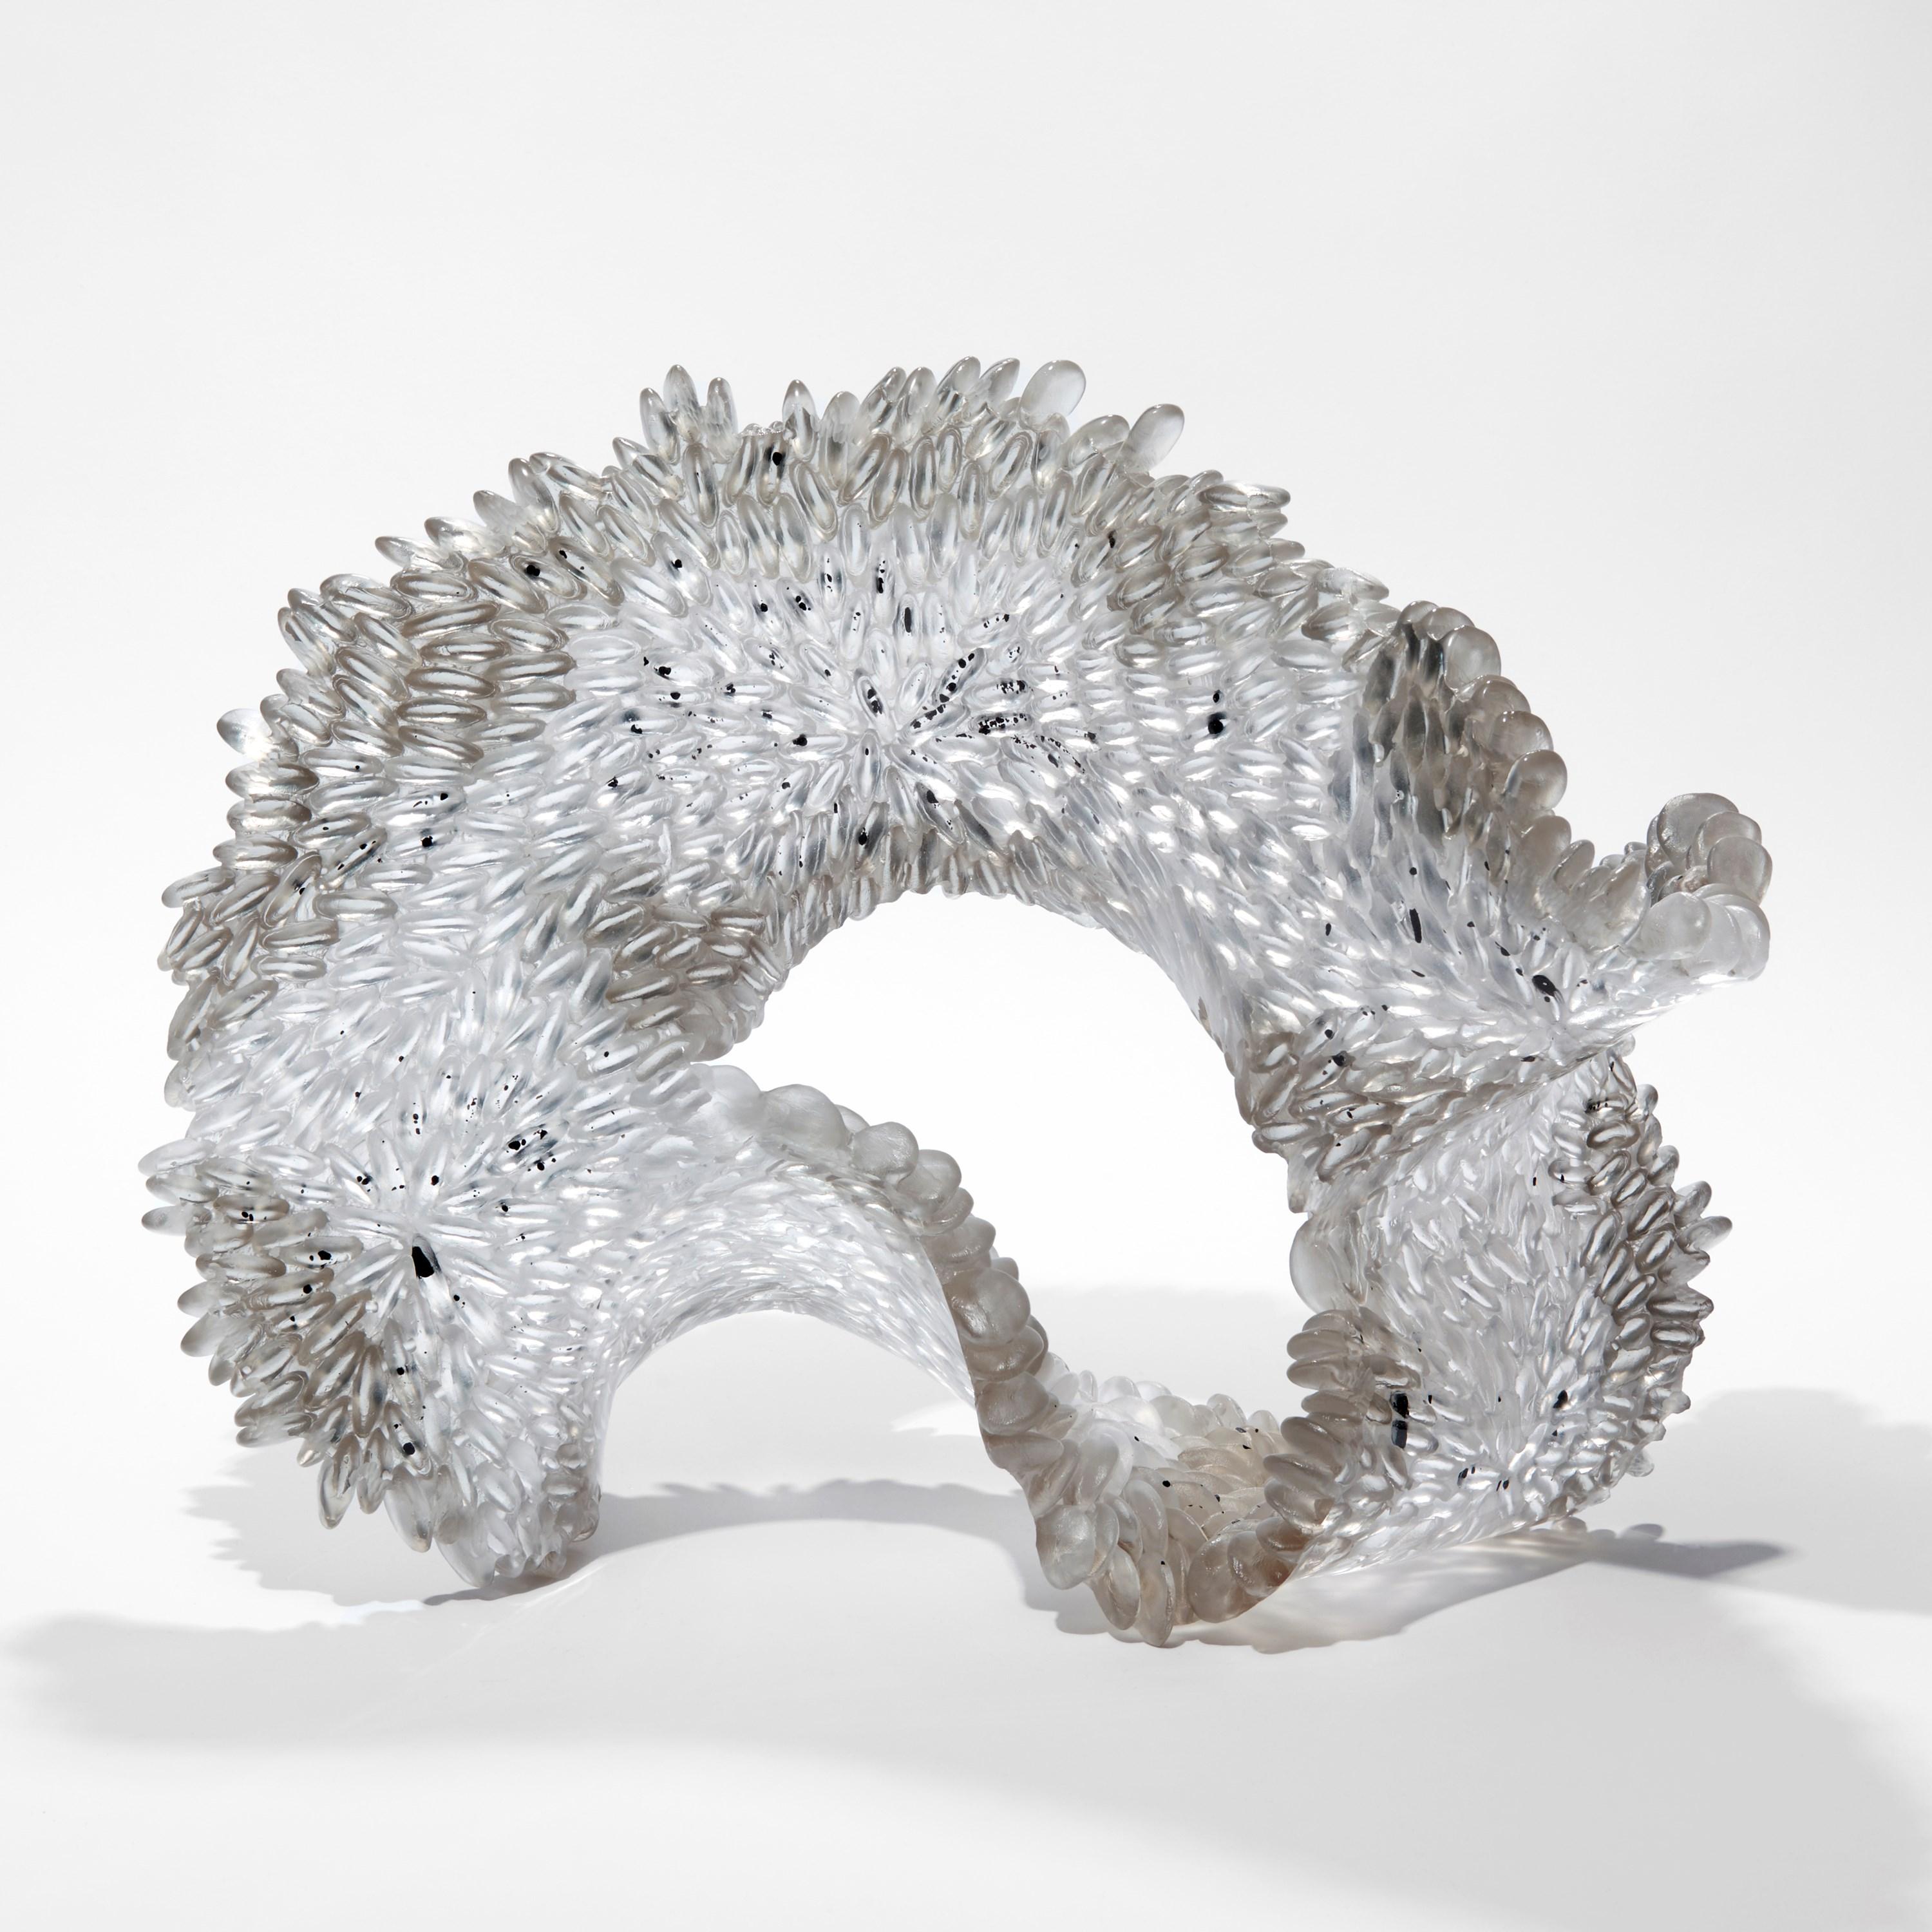 Organic Modern Speckled Grey, Standing Textured Cast Glass Sculpture by Nina Casson McGarva